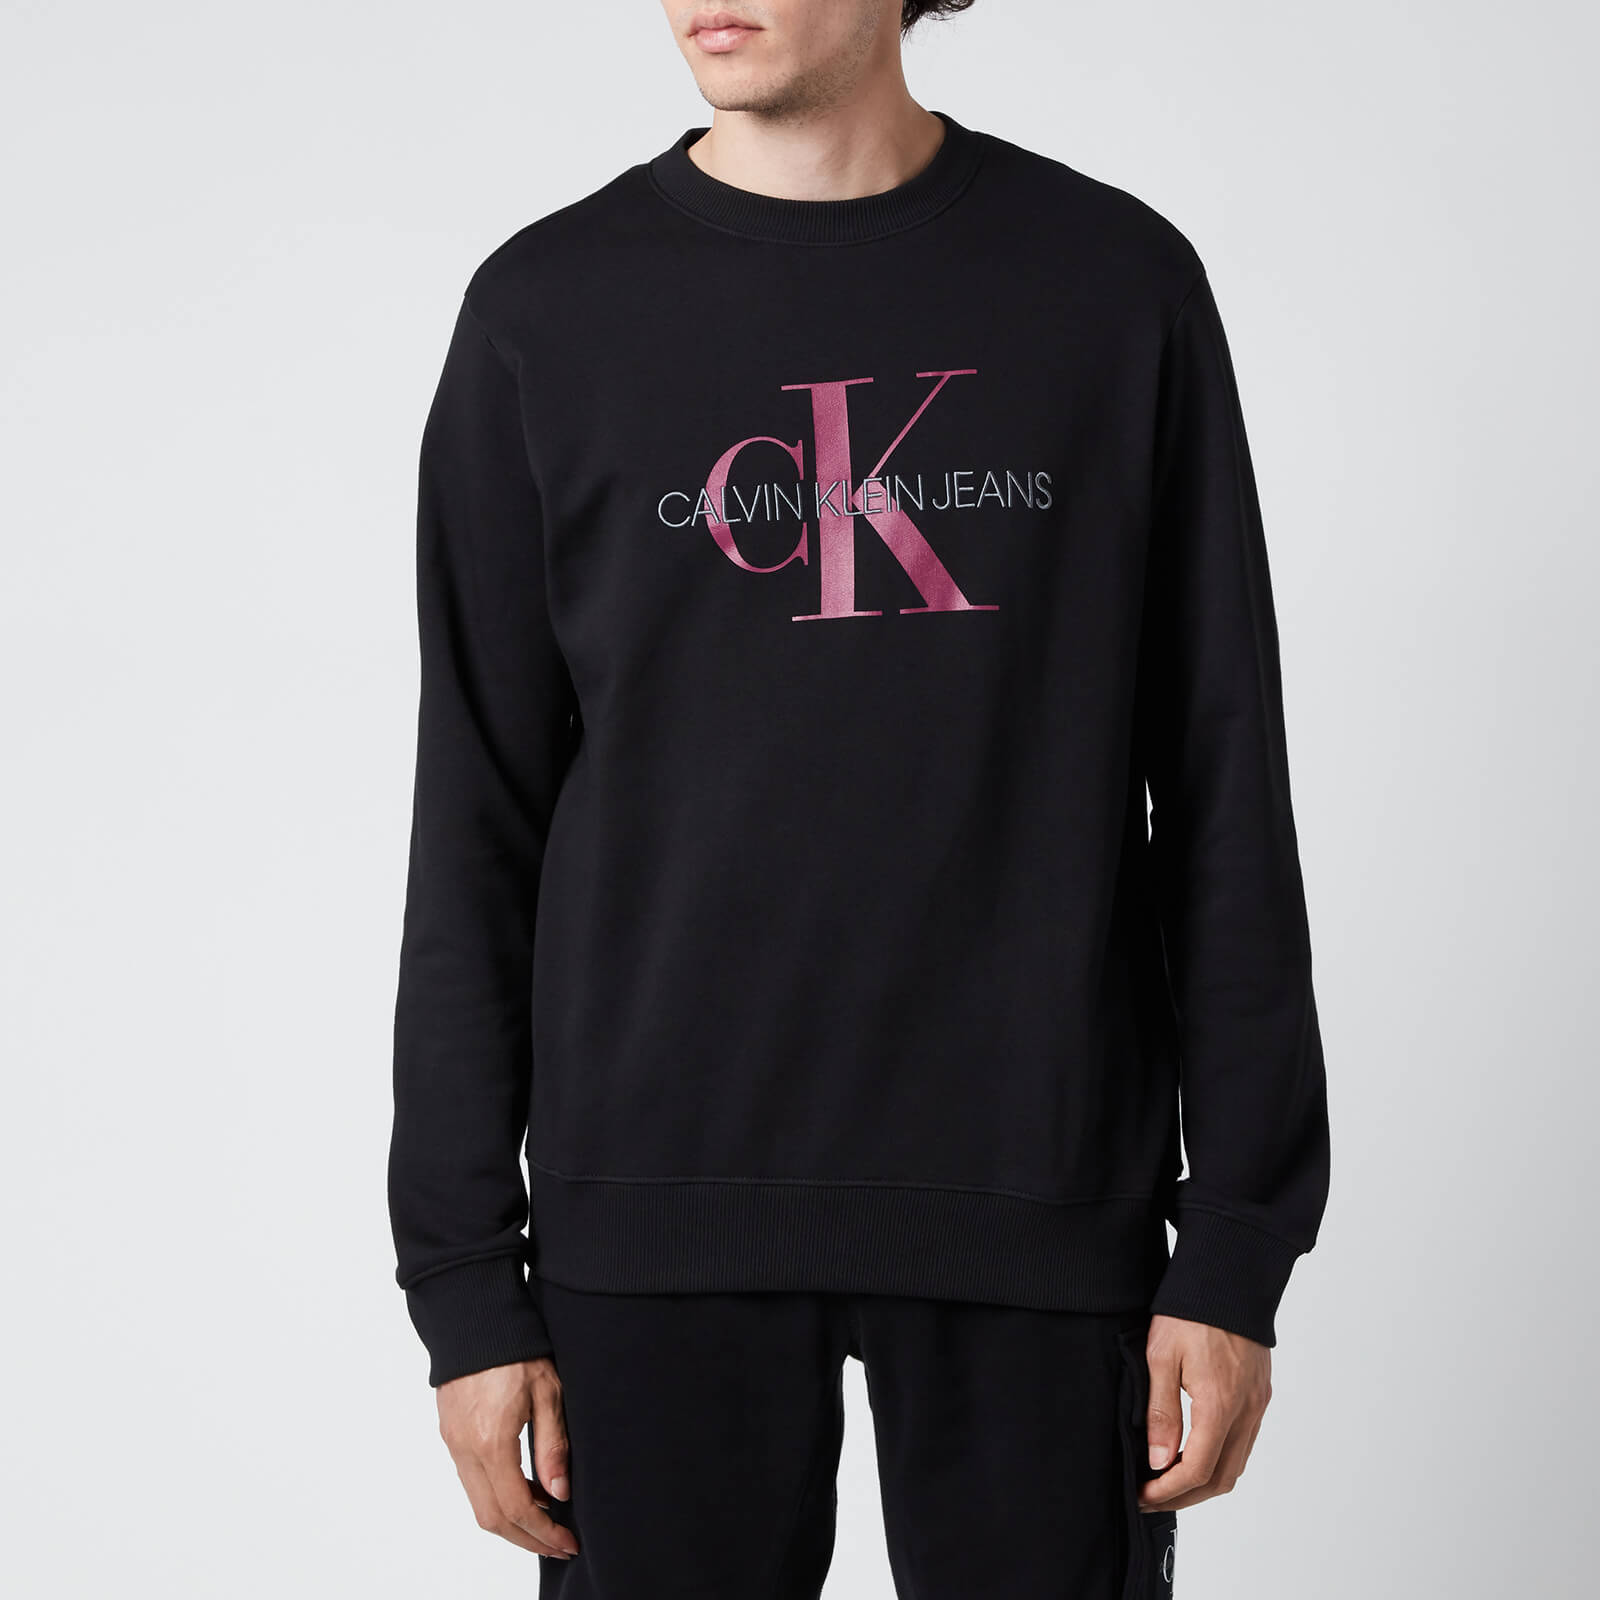 Calvin Klein Jeans Men's Organic Cotton Monogram Sweatshirt - Black - S